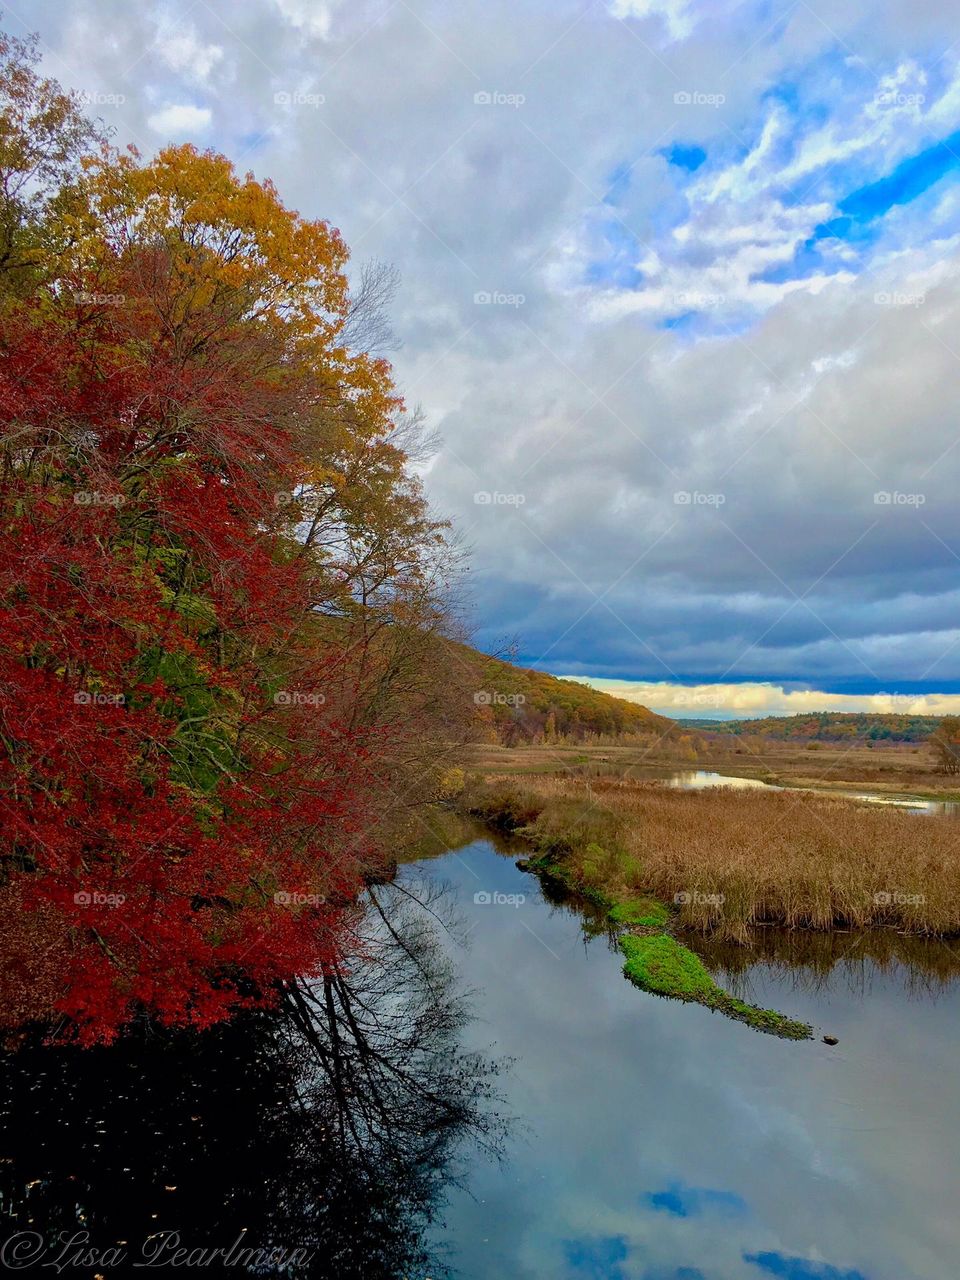 Autumn foliage along the Blackstone River in Uxbridge, MA. New England is known for its lush, vibrant colored foliage during the Fall season. 